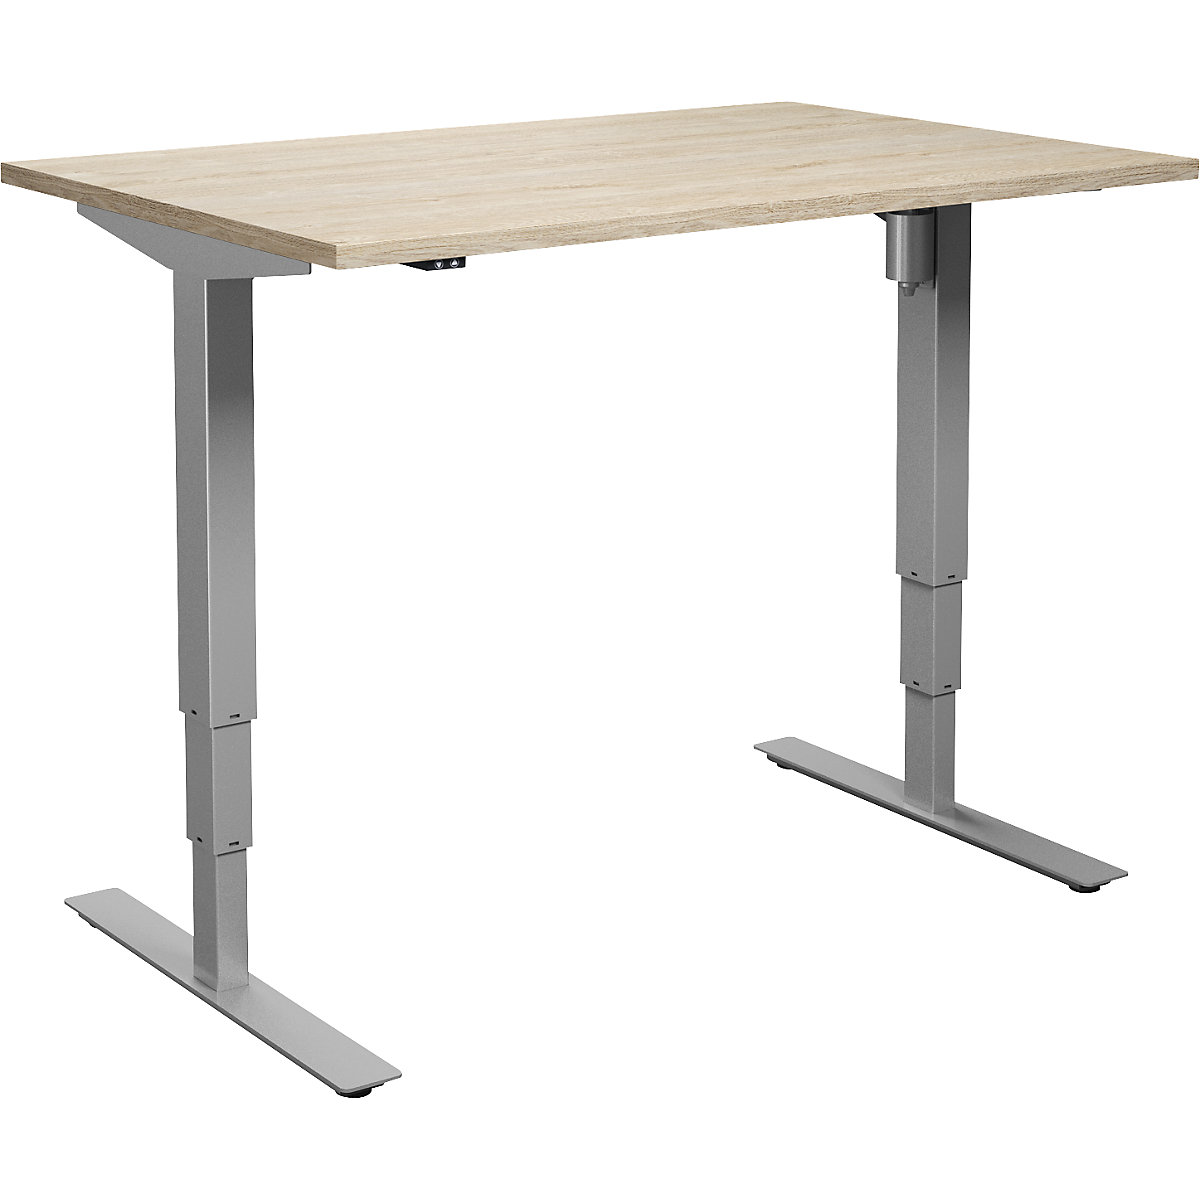 Atlanta desk, electrically height adjustable